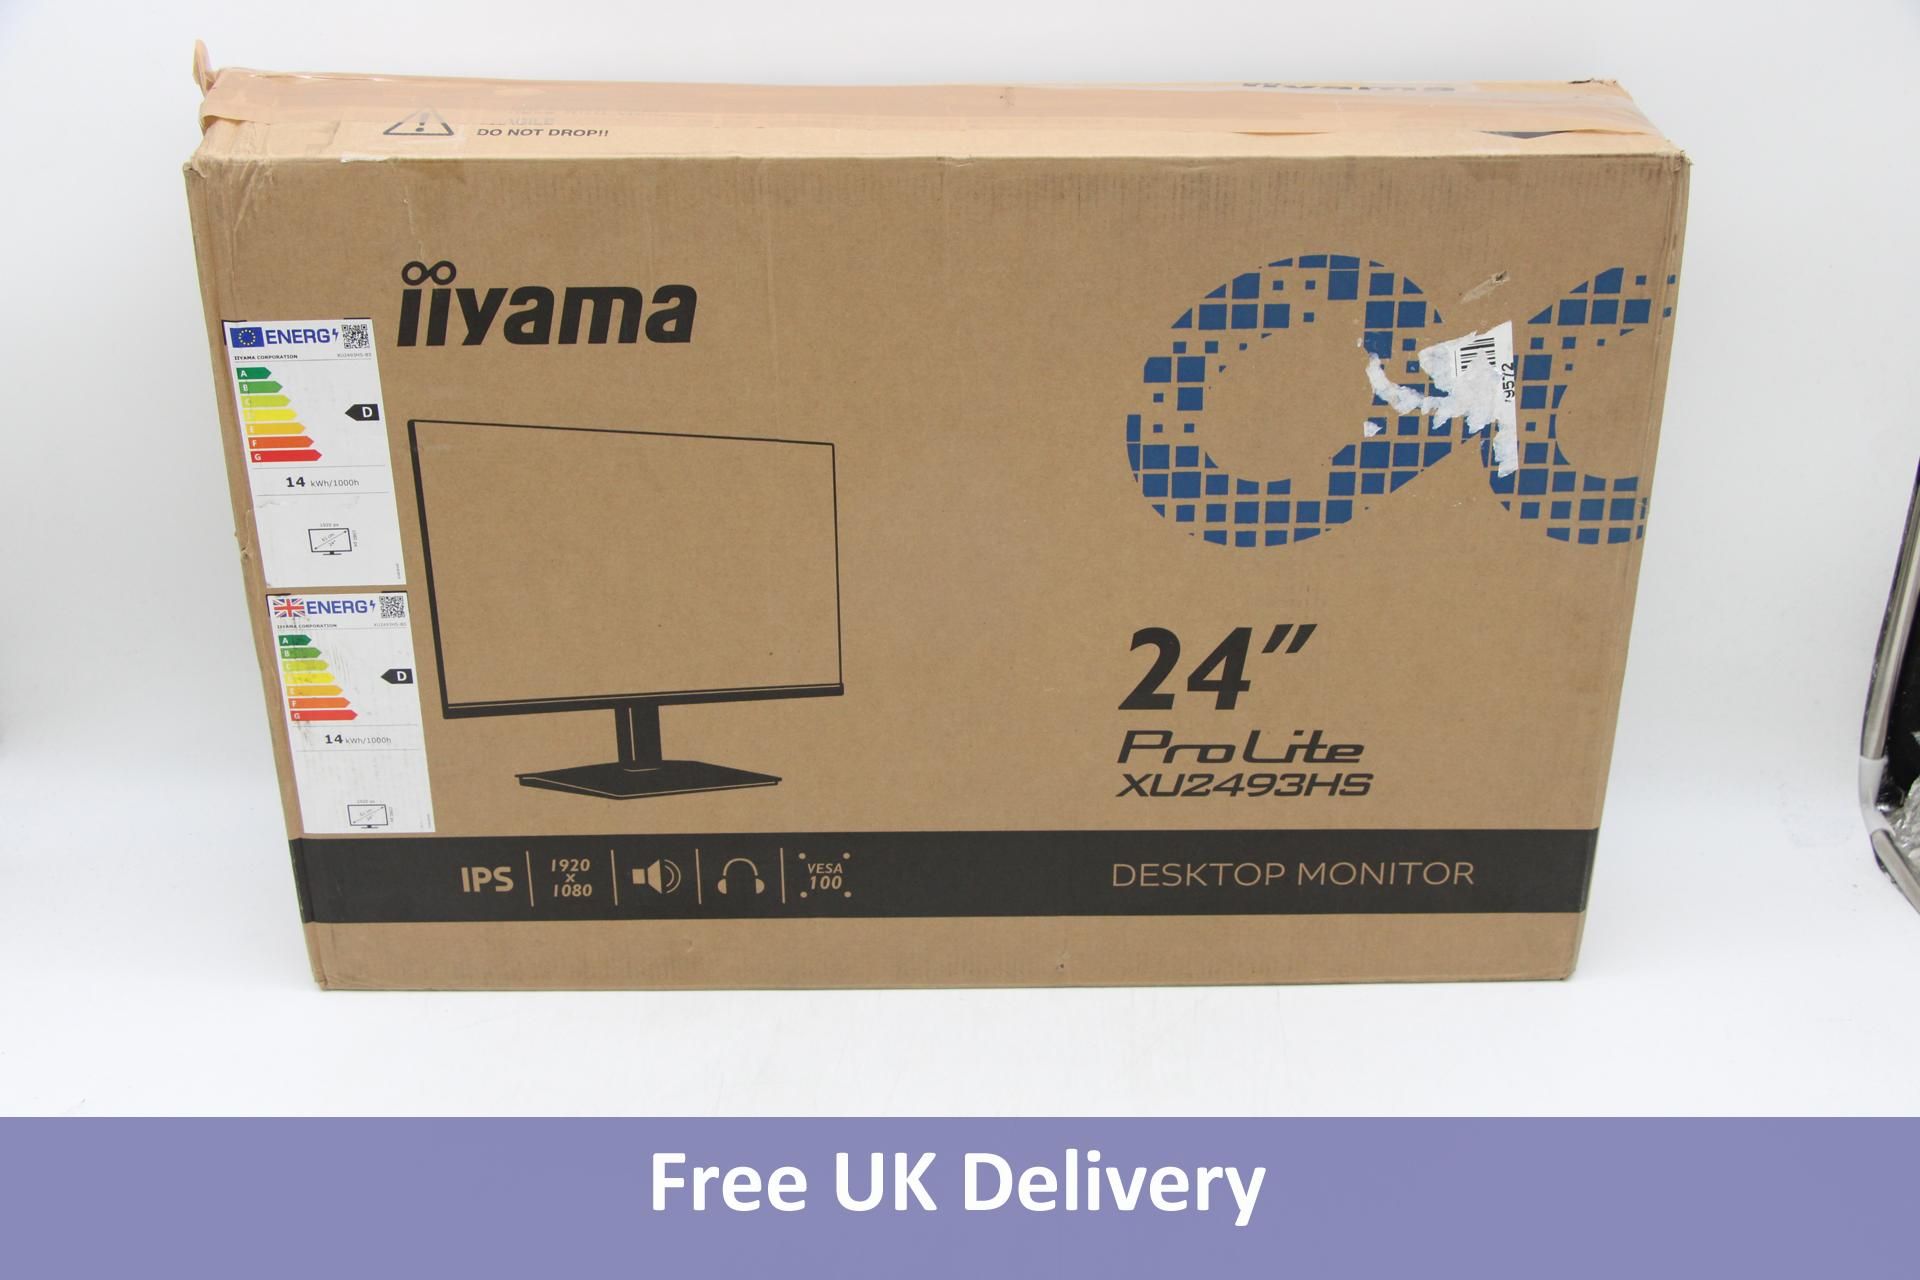 Iiyama Pro lite Desktop Monitor, XU2493HS-B5. Box damaged